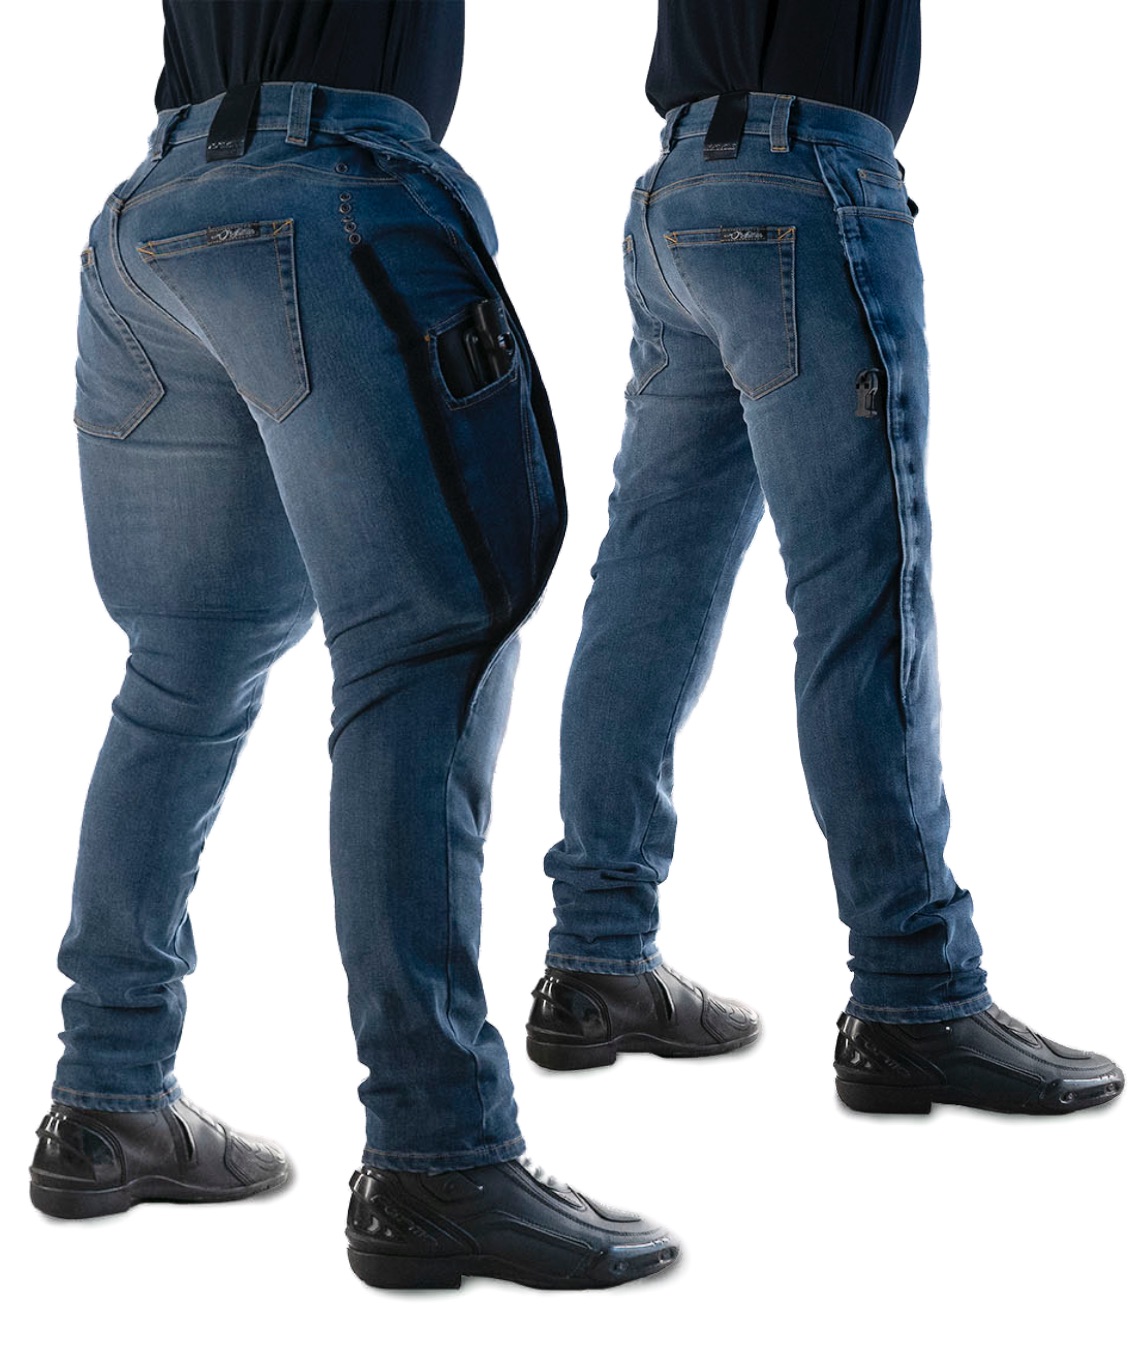 Airbag Jeans - Pre Order - Motorcycle Air Jacket - Safety Airbag Vest